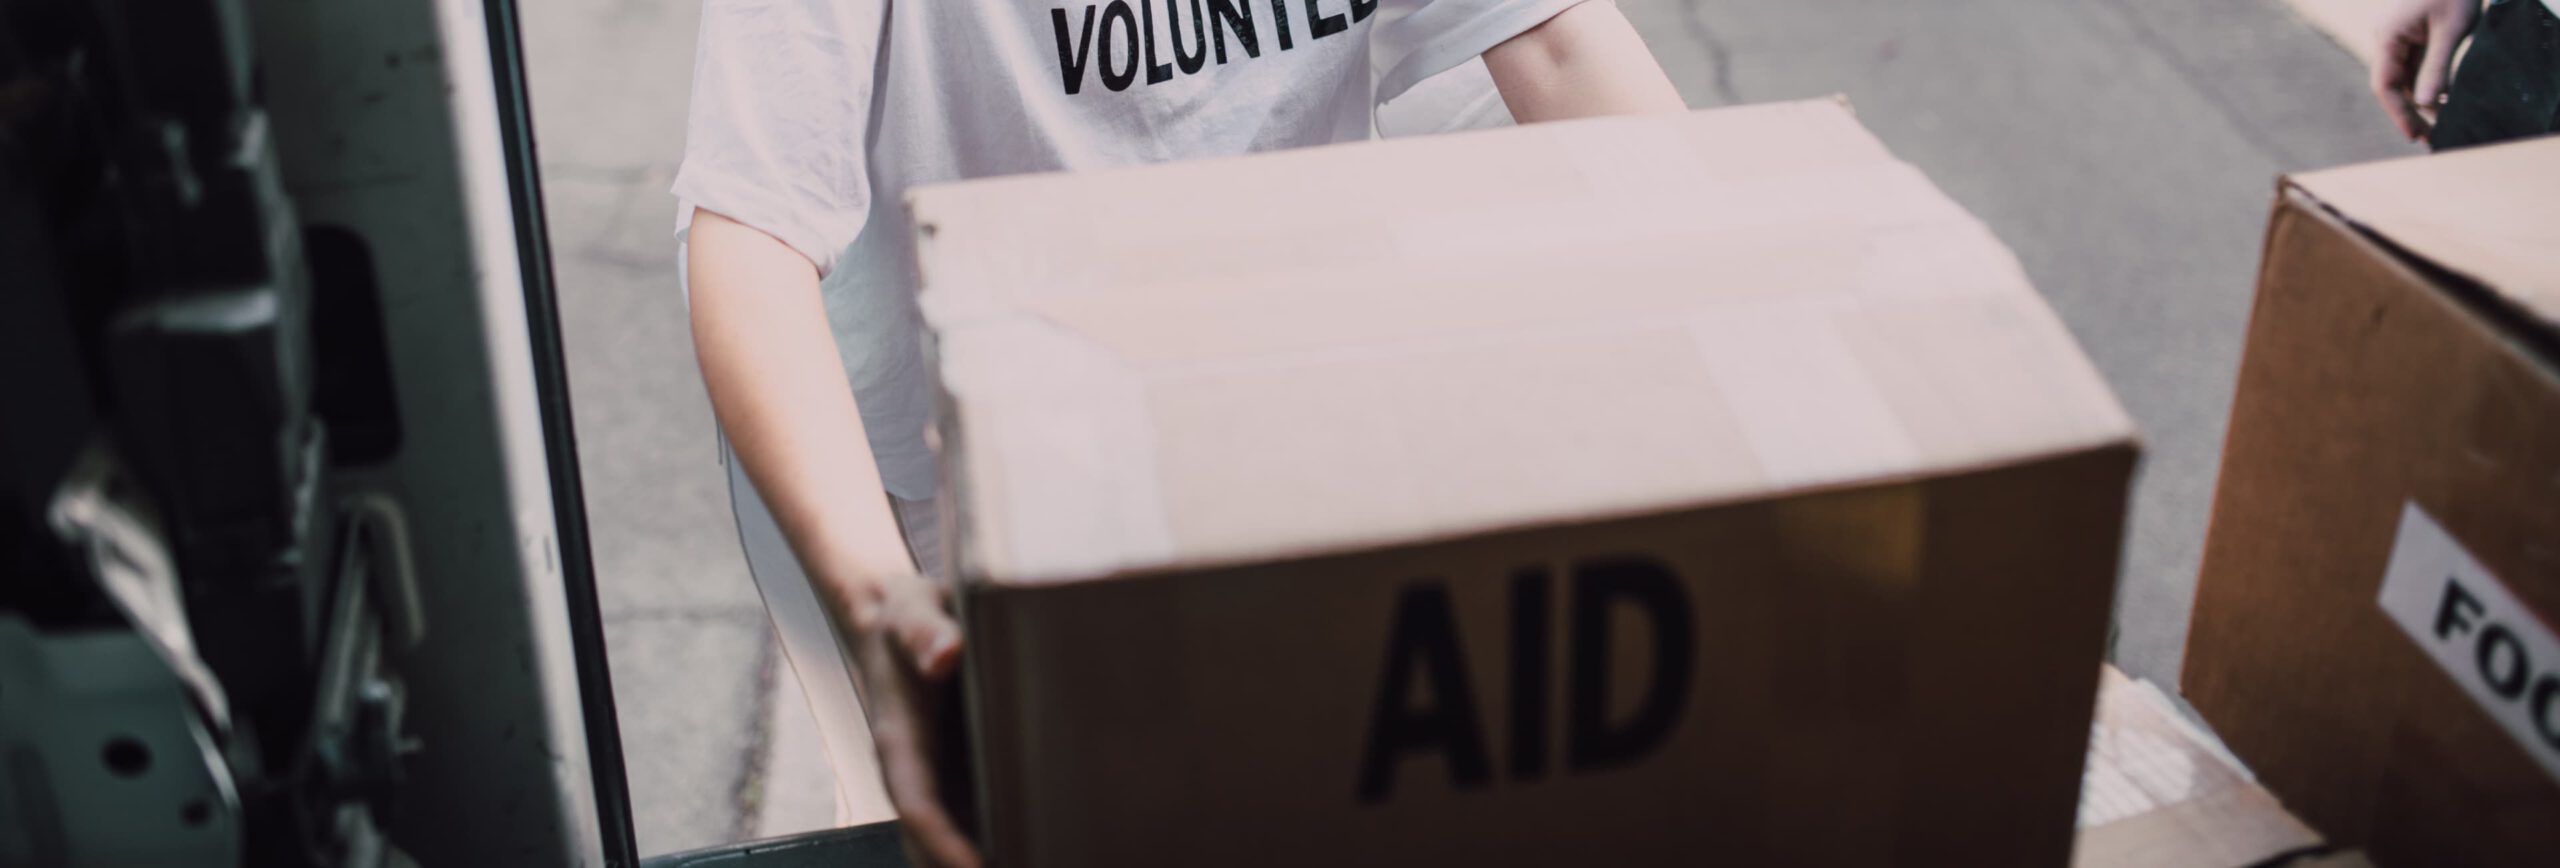 marian's closet volunteer carrying a box